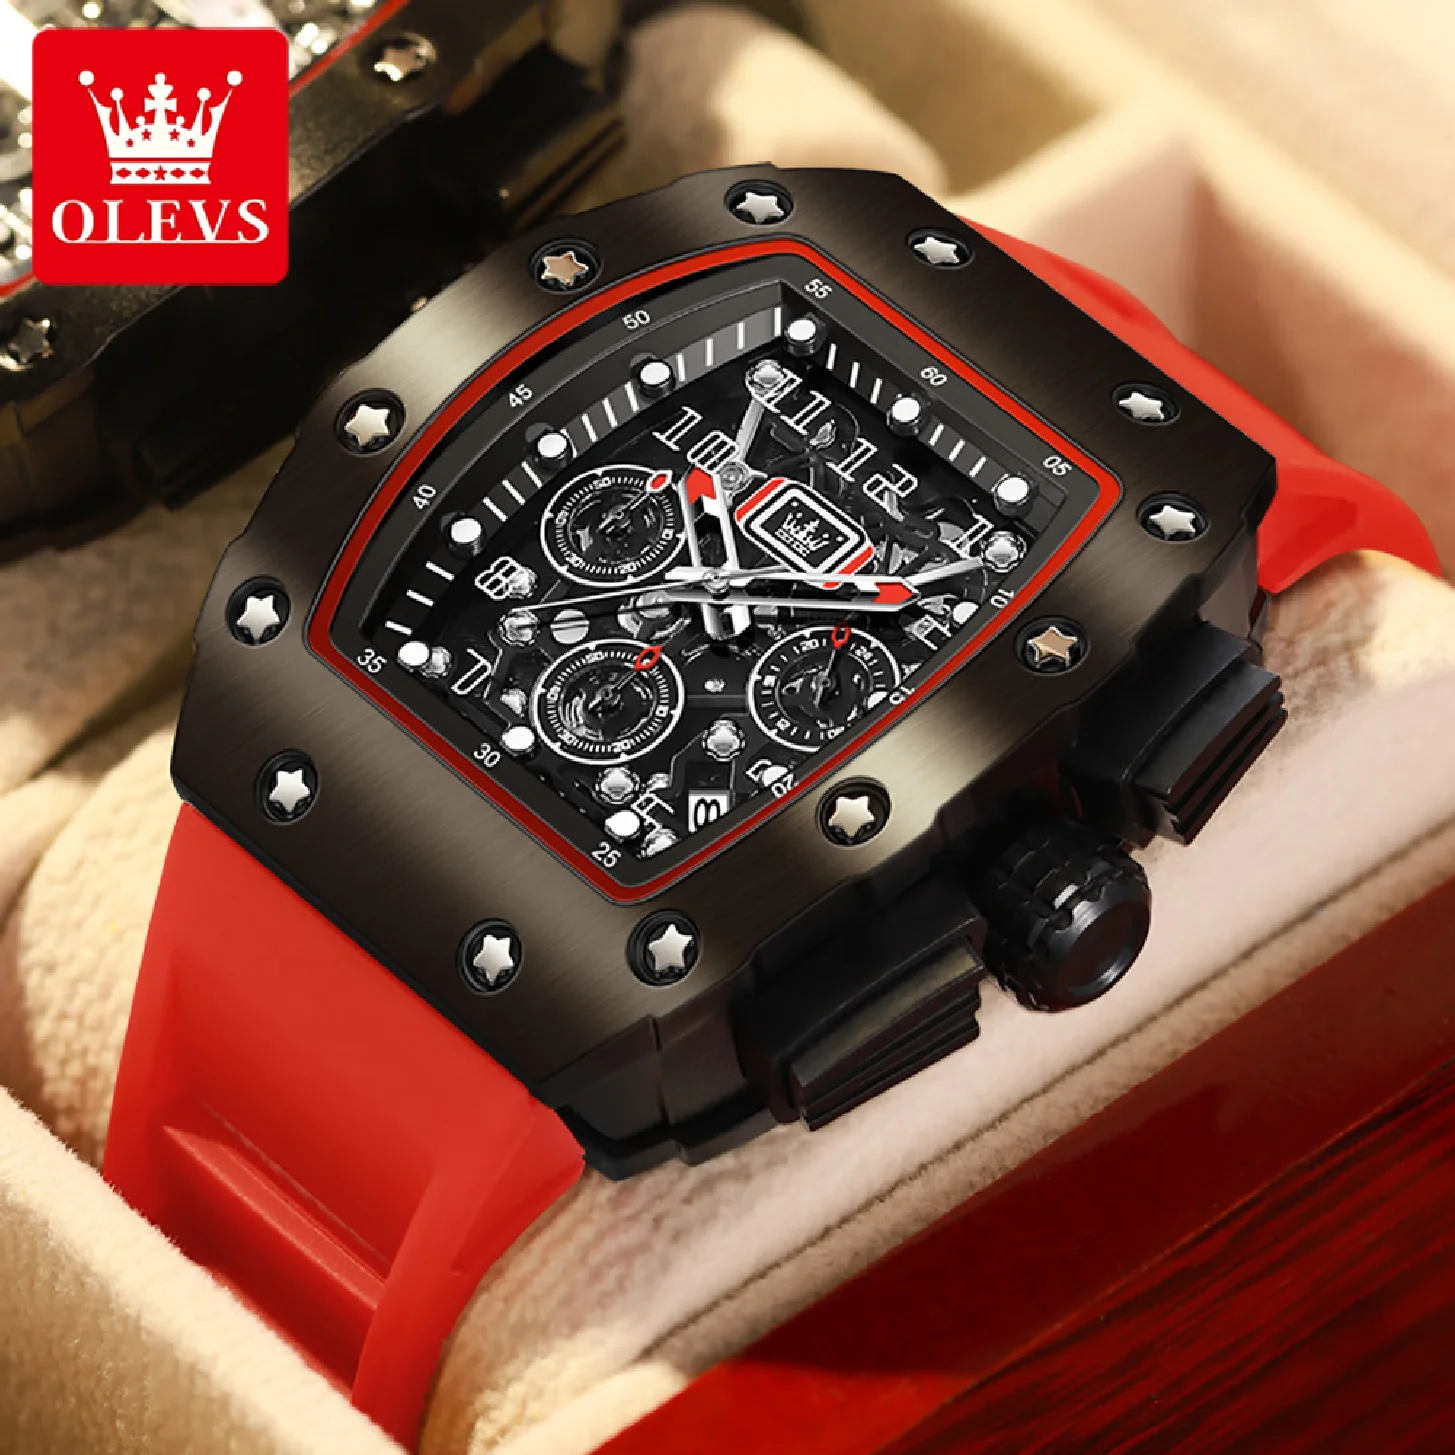 

OLEVS Men's Watch Tonneau Wristwatch Quartz Hollow Out Watches Waterproof Stylish Design with Silicone Strap